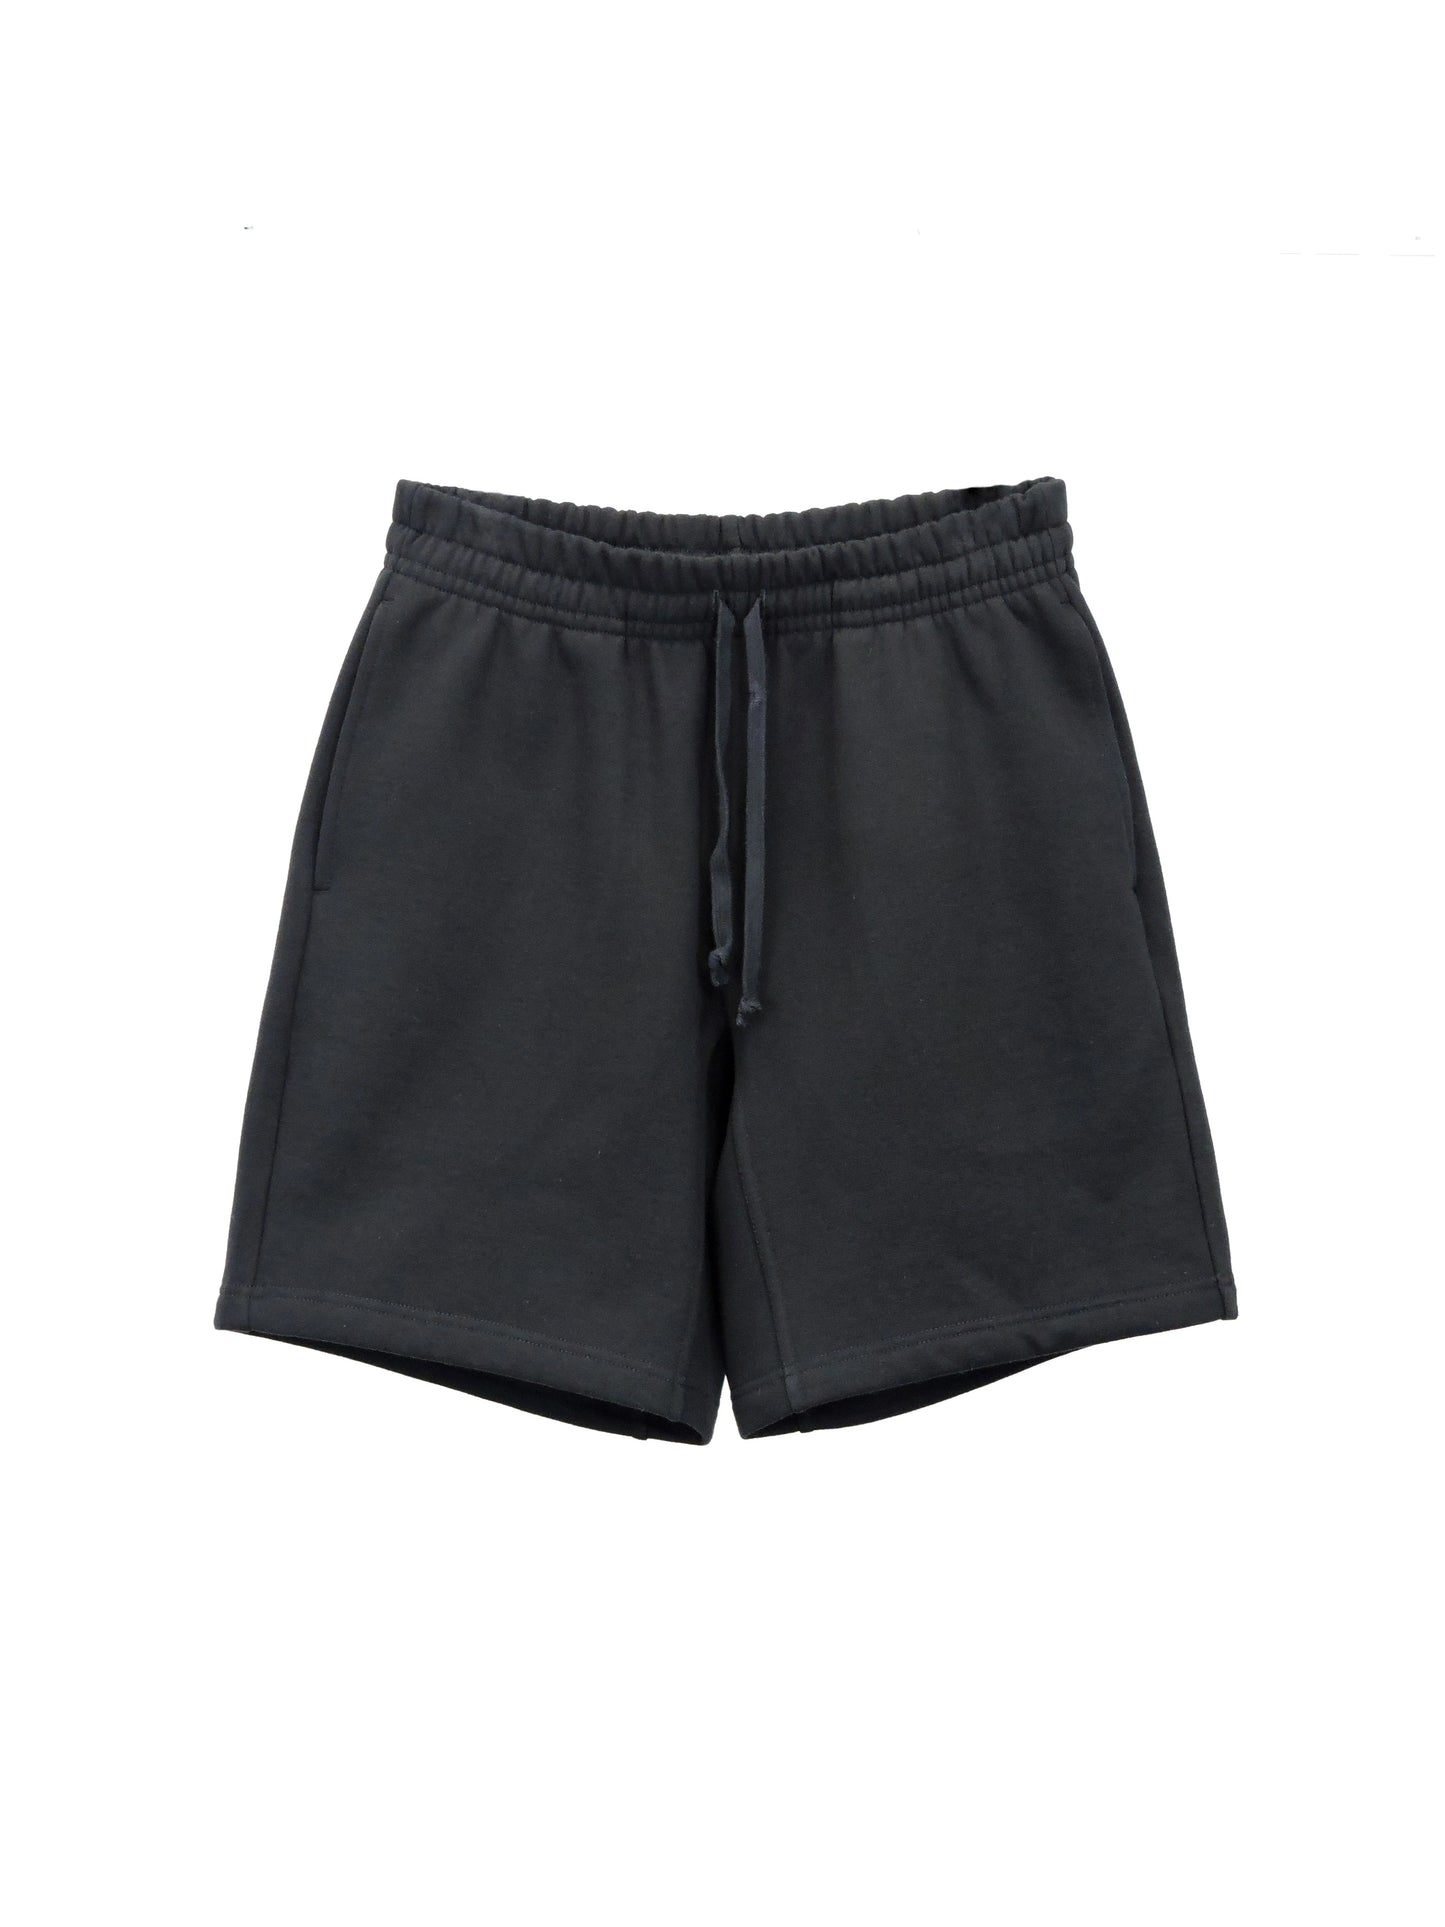 Short Street Shorts made with black heavy fleece